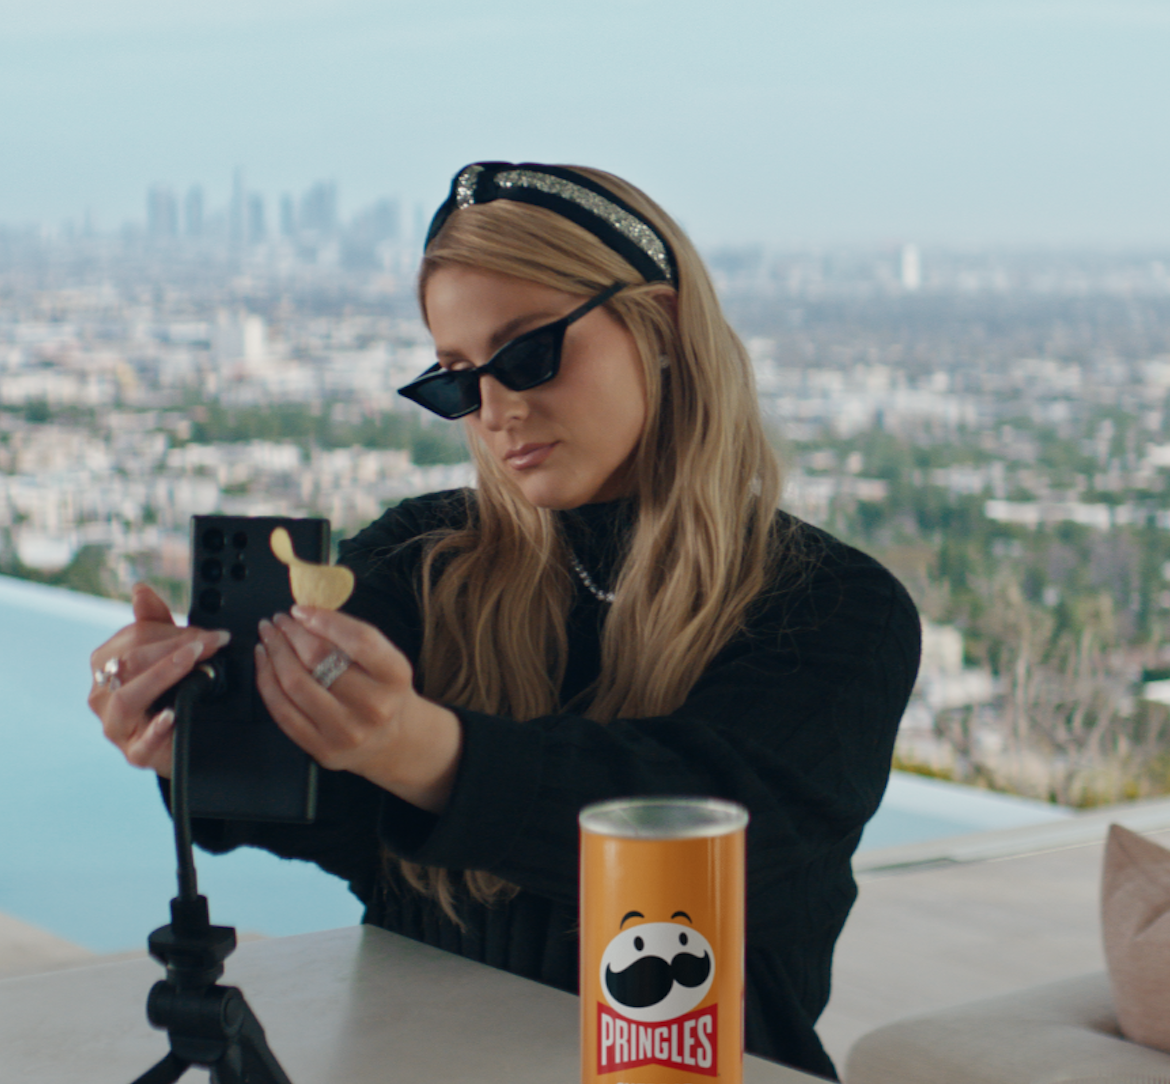 Pringles teases award-winning talent Meghan Trainor in Super Bowl commercial teaser